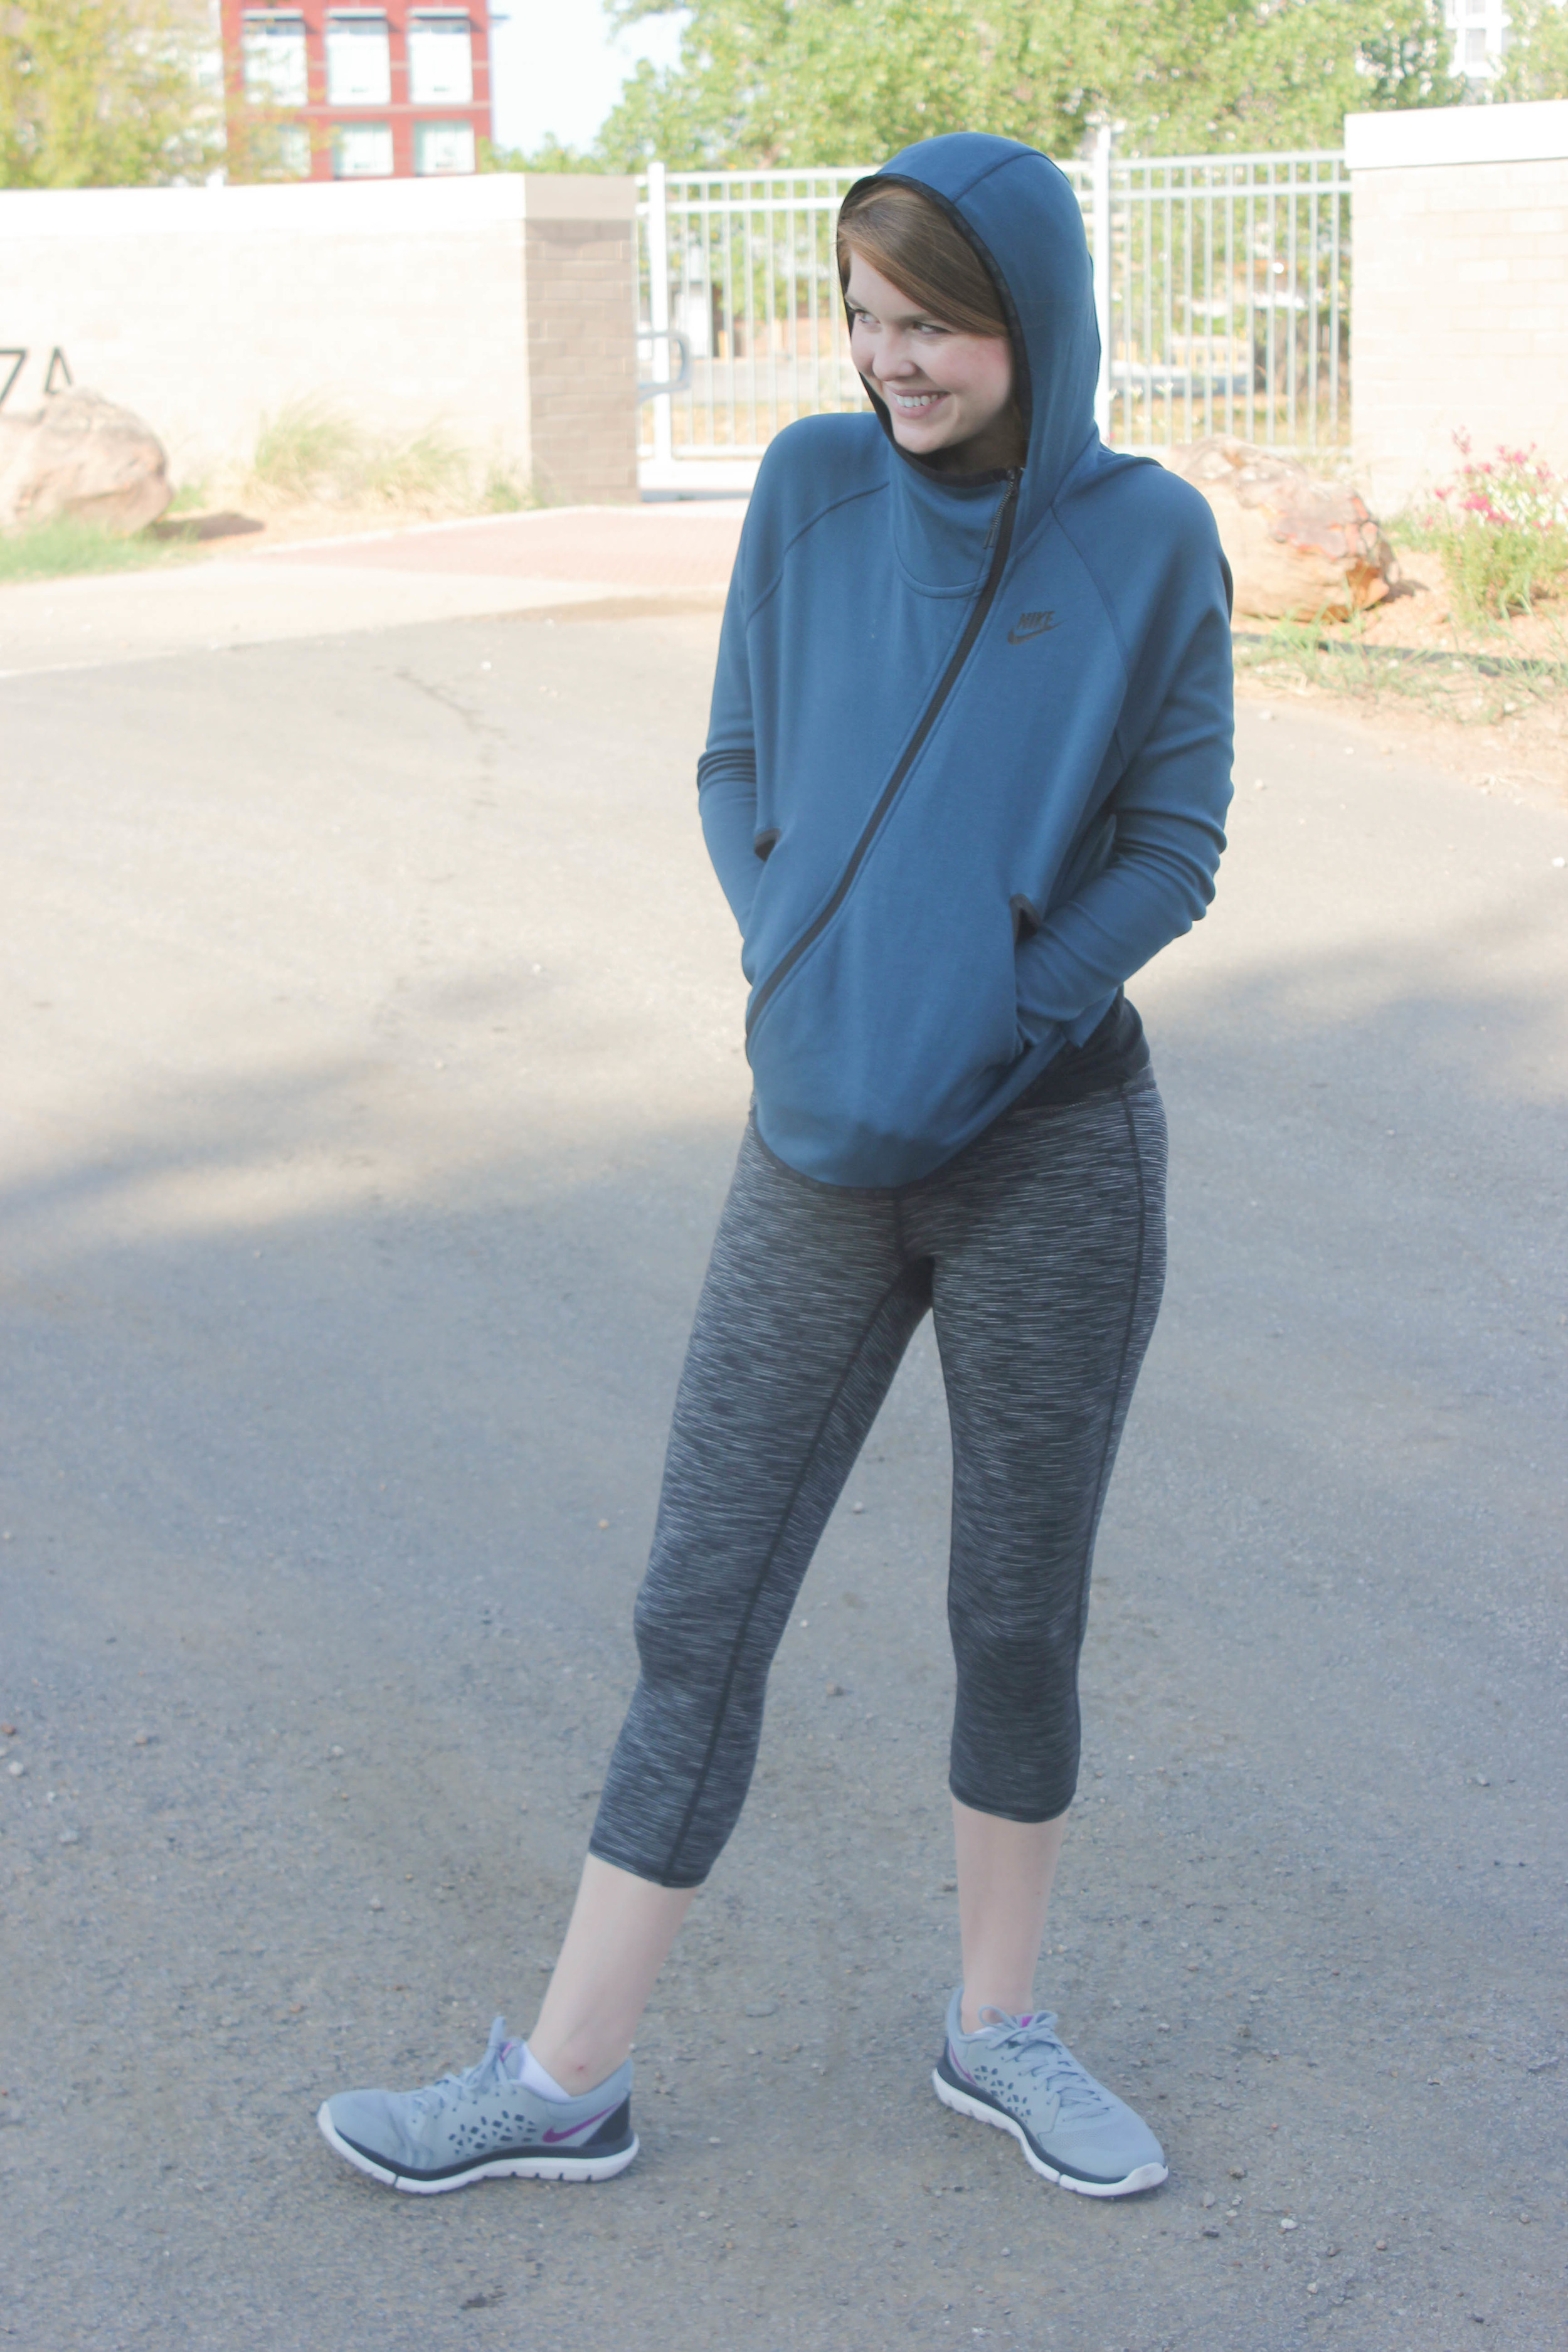 Nike Jacket, Athleta Tights | Southern Elle Style | Dallas Fashion Blogger